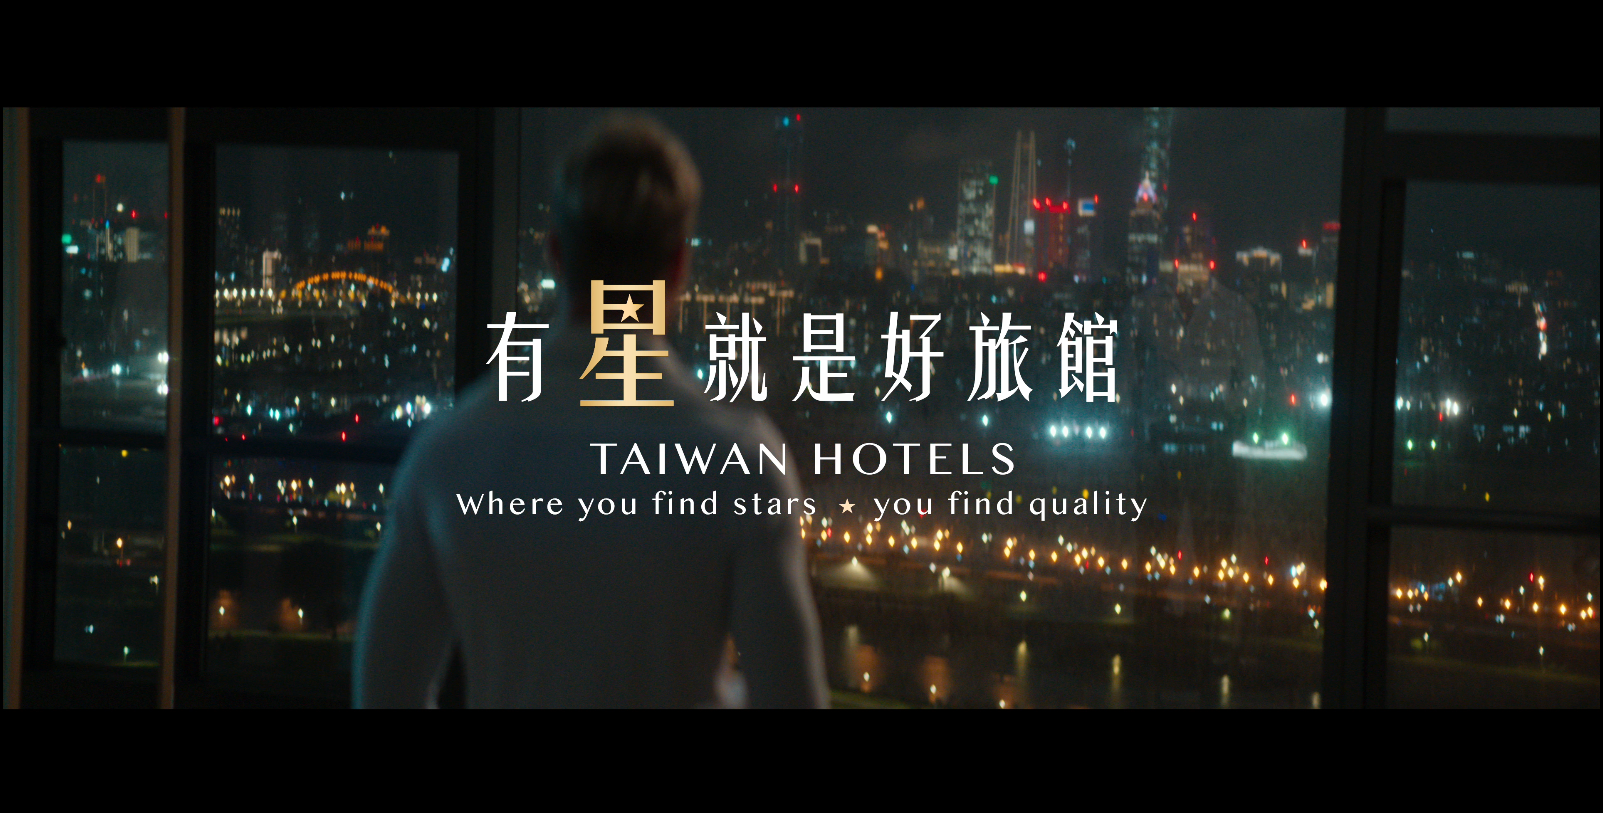  星級旅館｜有星就是好旅館 - 2023年度預告片TAIWAN HOTELS - Where you find stars, you find quality.(30s)